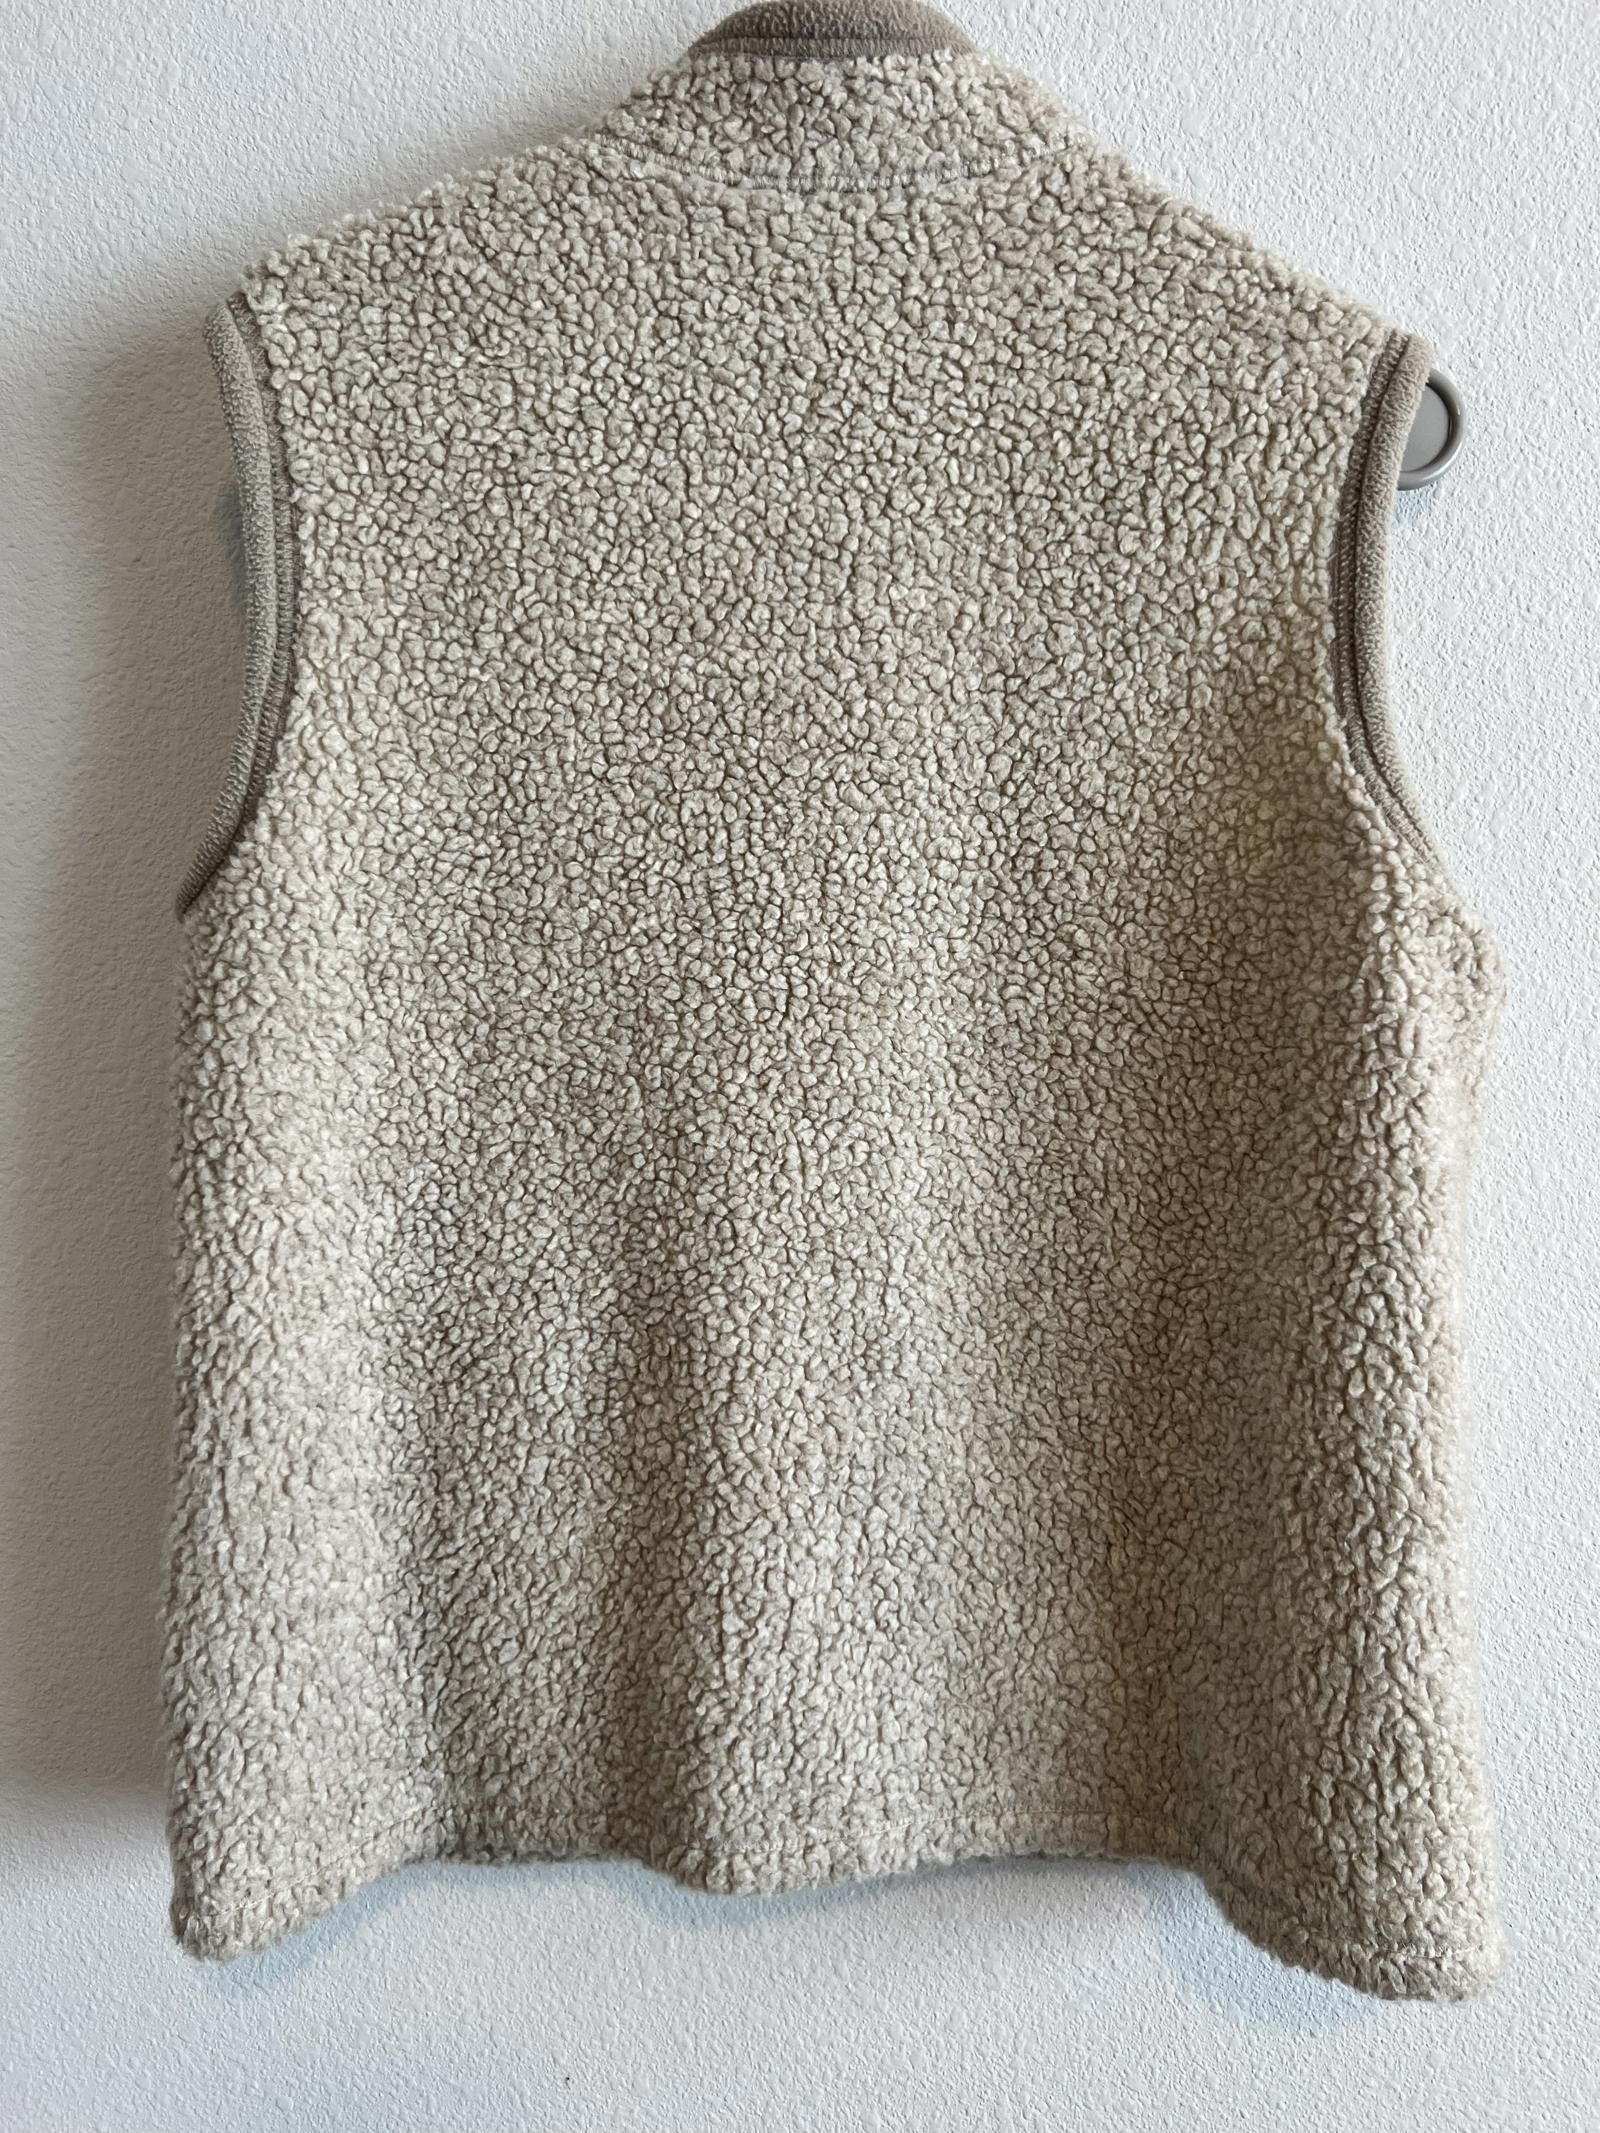 Woolrich Woolen Mills Woolrich Tan Outdoors Vest Womens Medium Size M / US 6-8 / IT 42-44 - 4 Preview